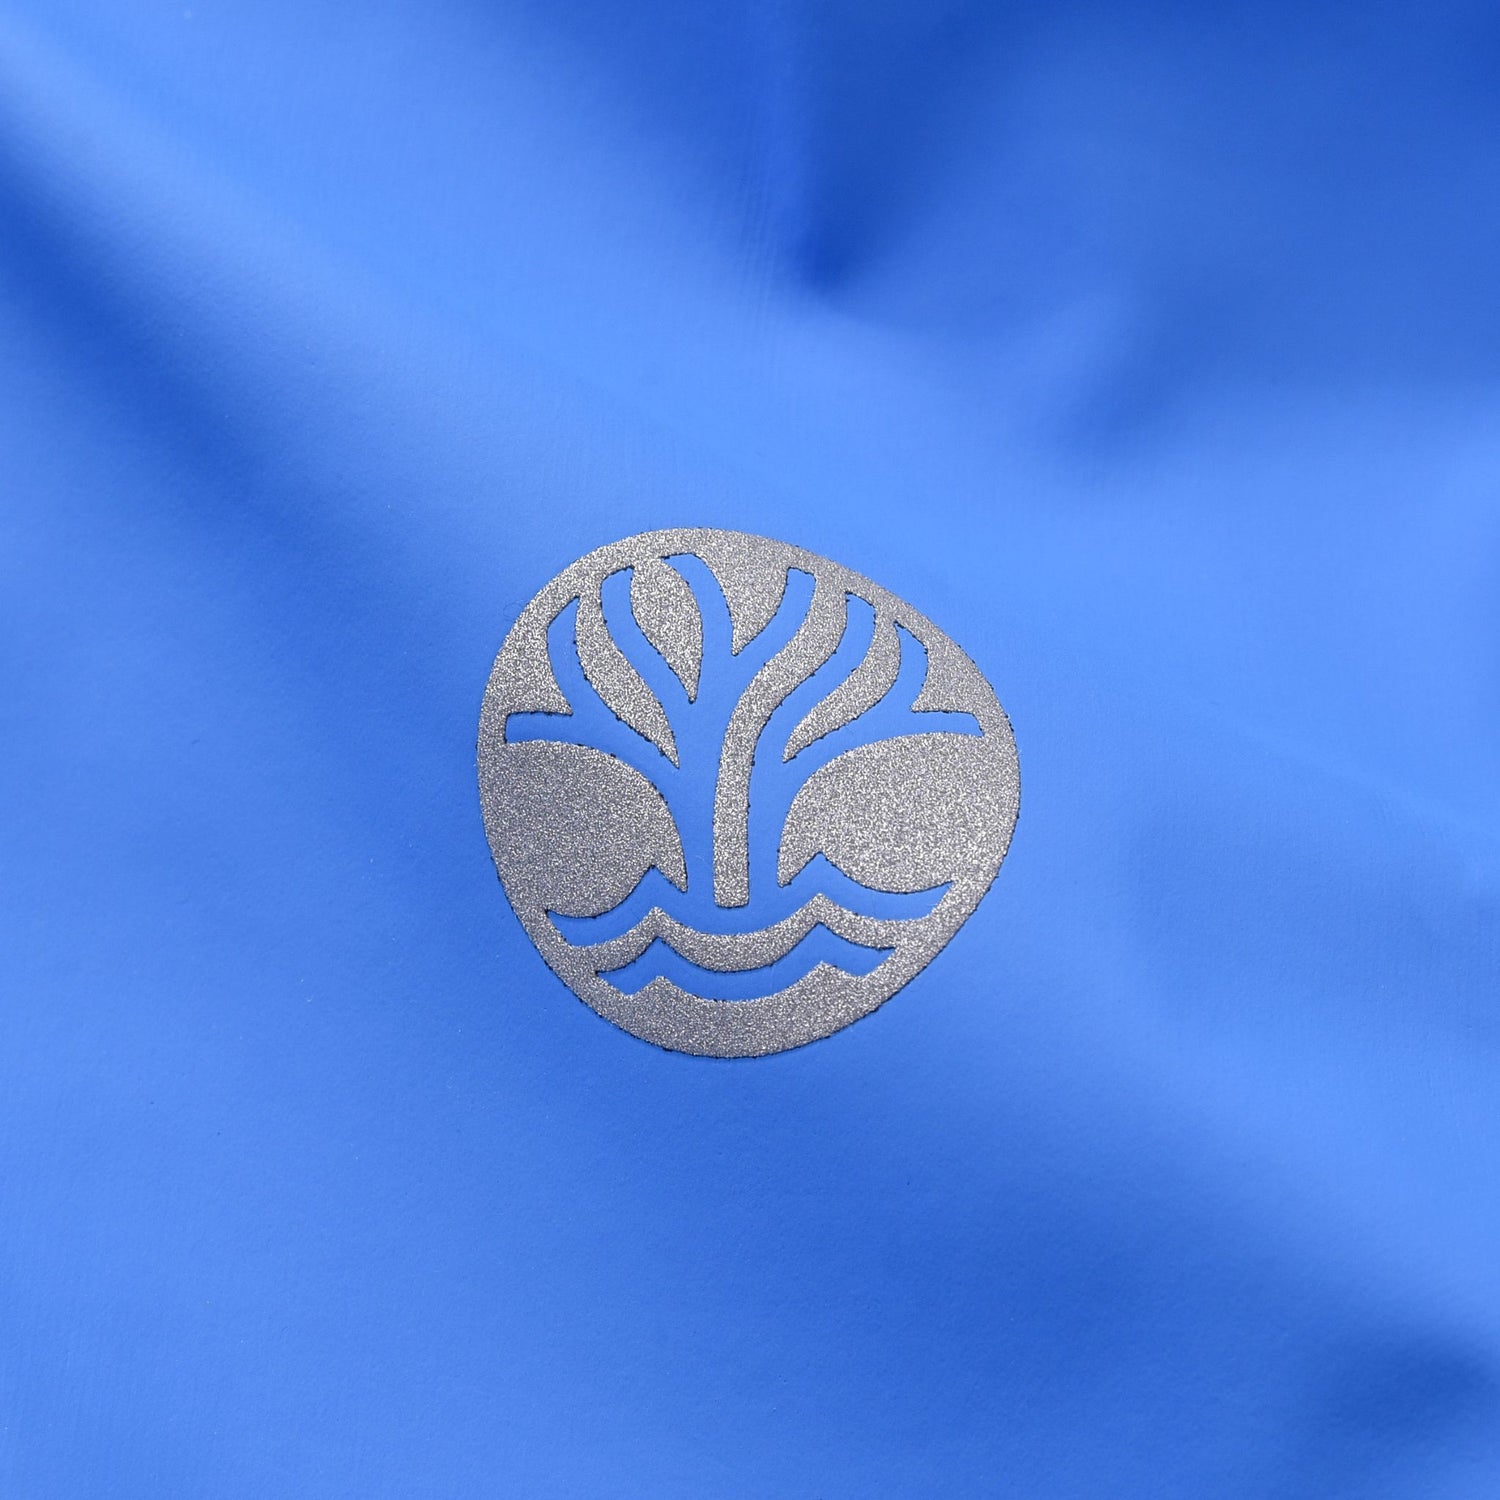 Reflective Wavetree logo on blue raincoat